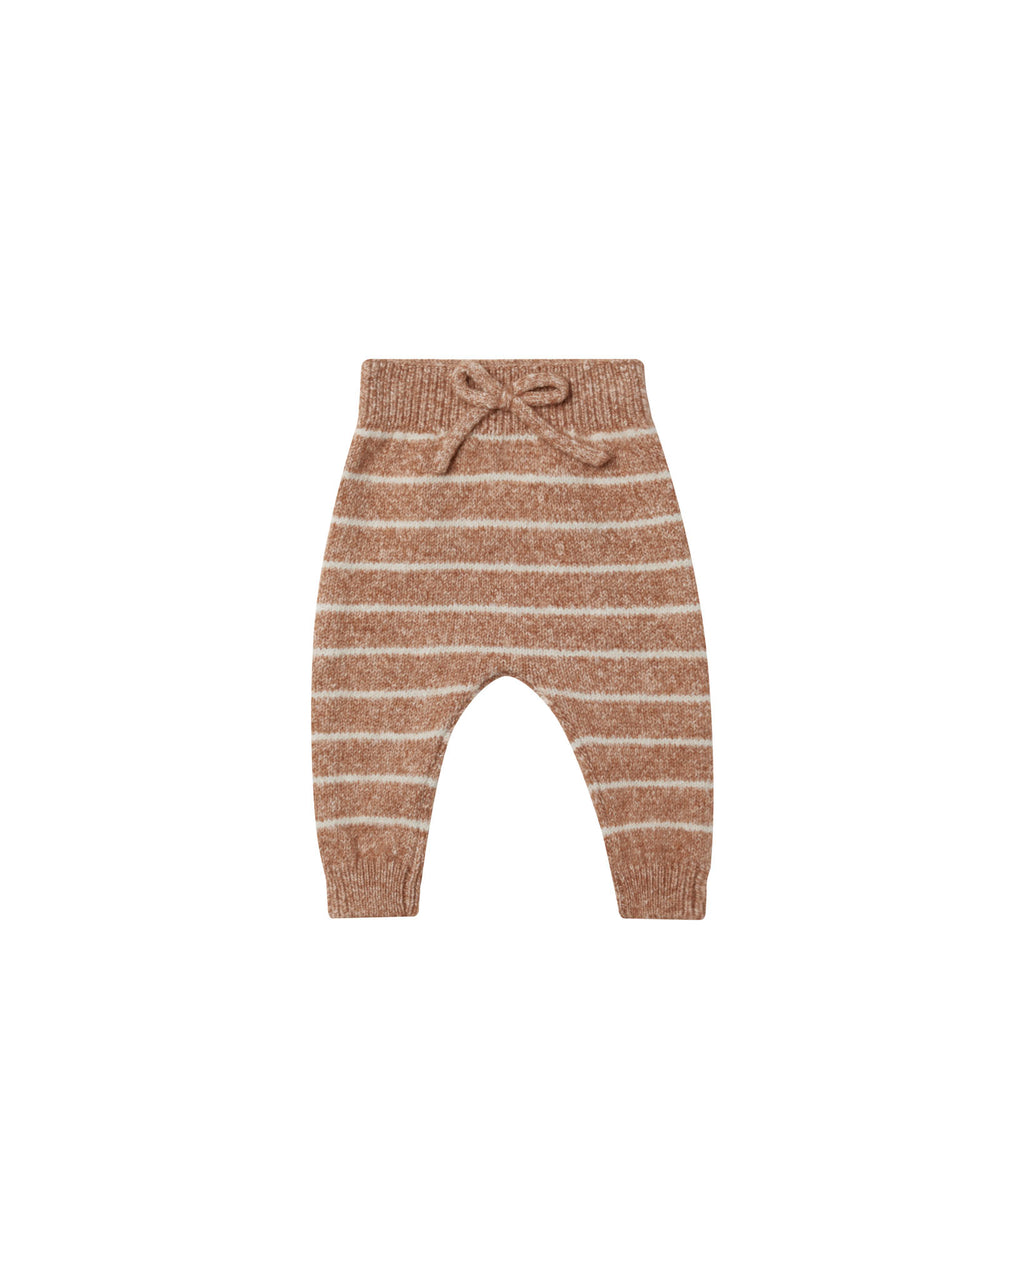 Quincy Mae Knit Pant - Cinnamon Stripe